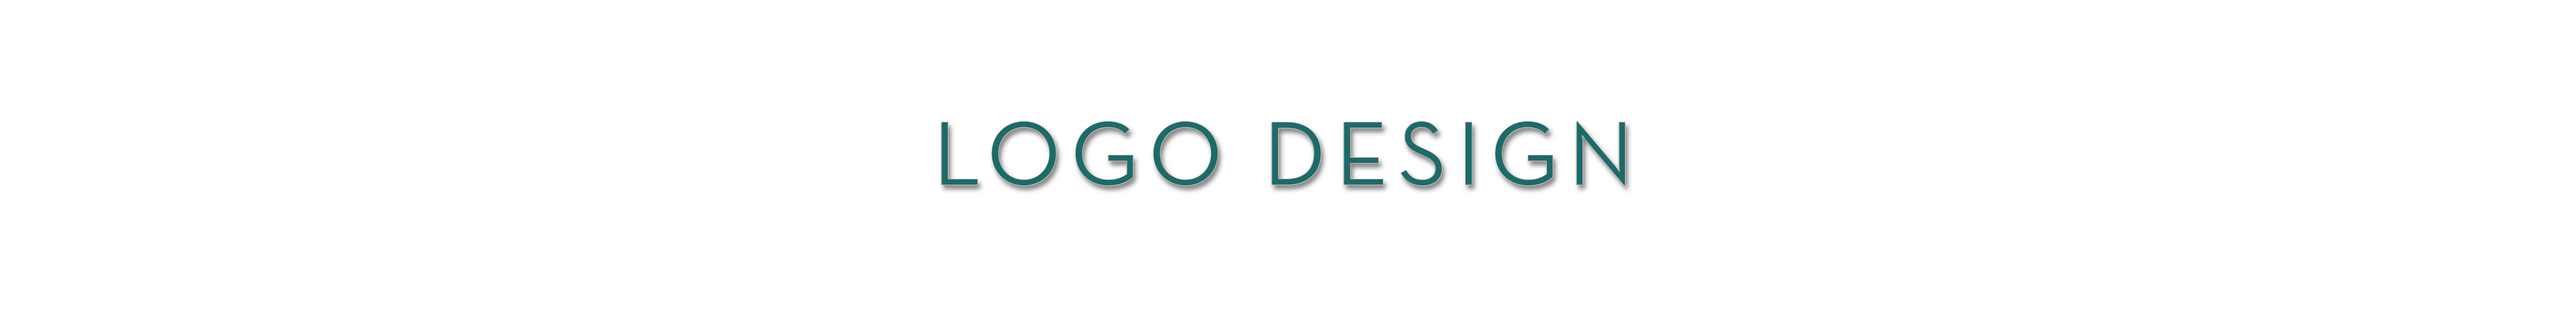 Oosh! Creative Logo Design